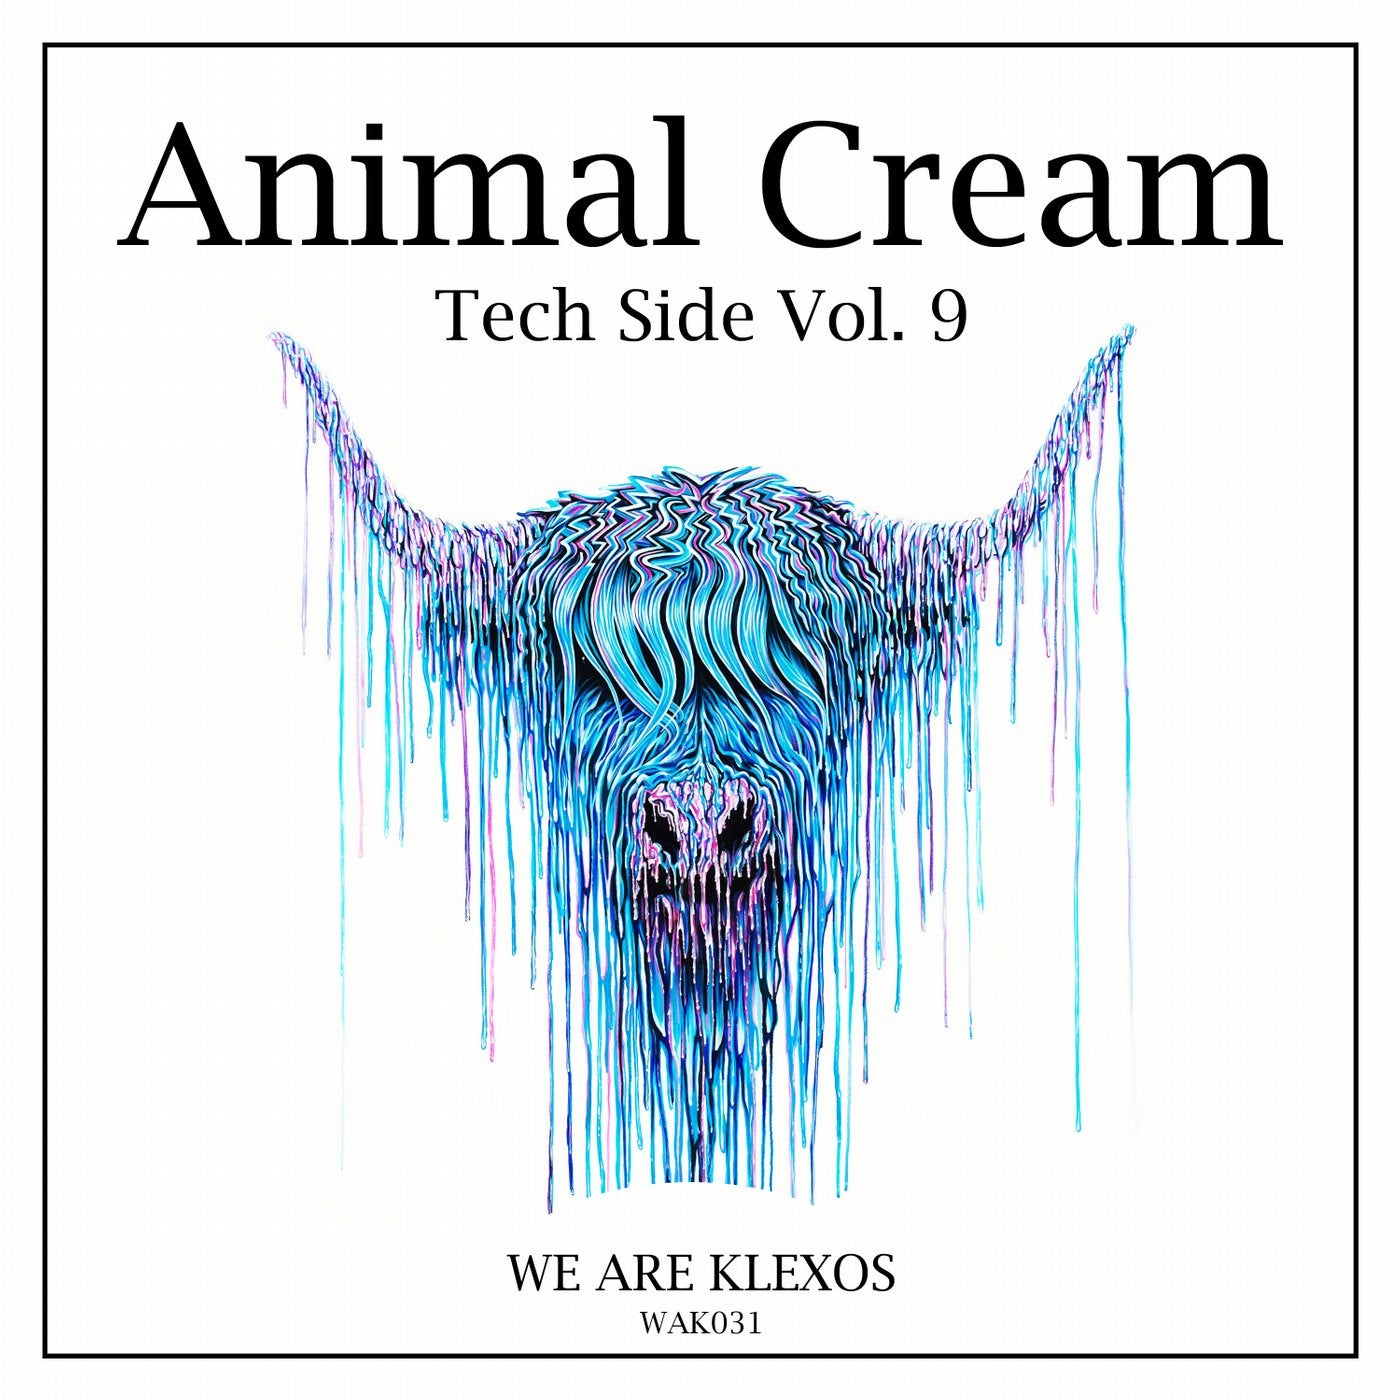 Animal Cream Tech Side, Vol. 9